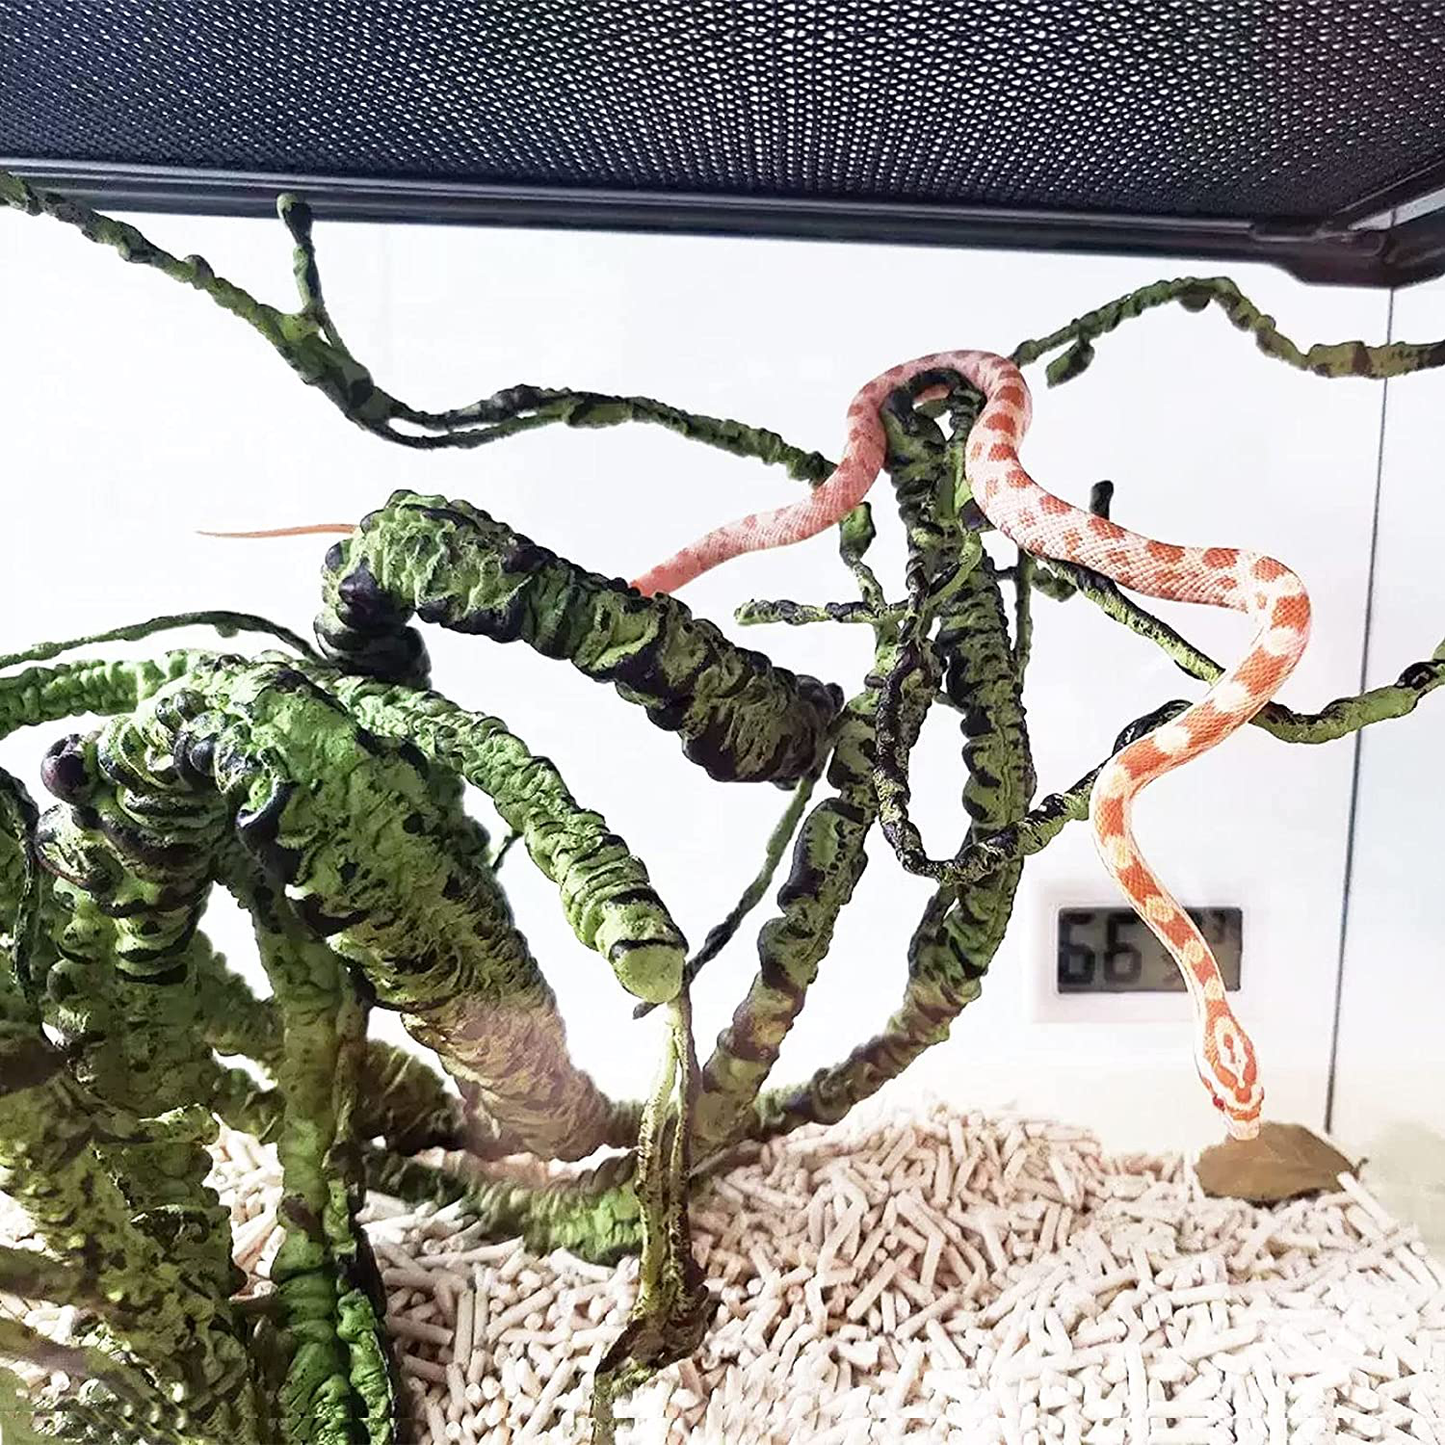 NUFR Reptile Vines Plants Habitat Decor Flexible Bendable Jungle Climbing Vine Hanging Plant Leaves Bearded Dragon Tank Decor Accessories Snake Hermit Crab Lizards Geckos Terrarium Decorations